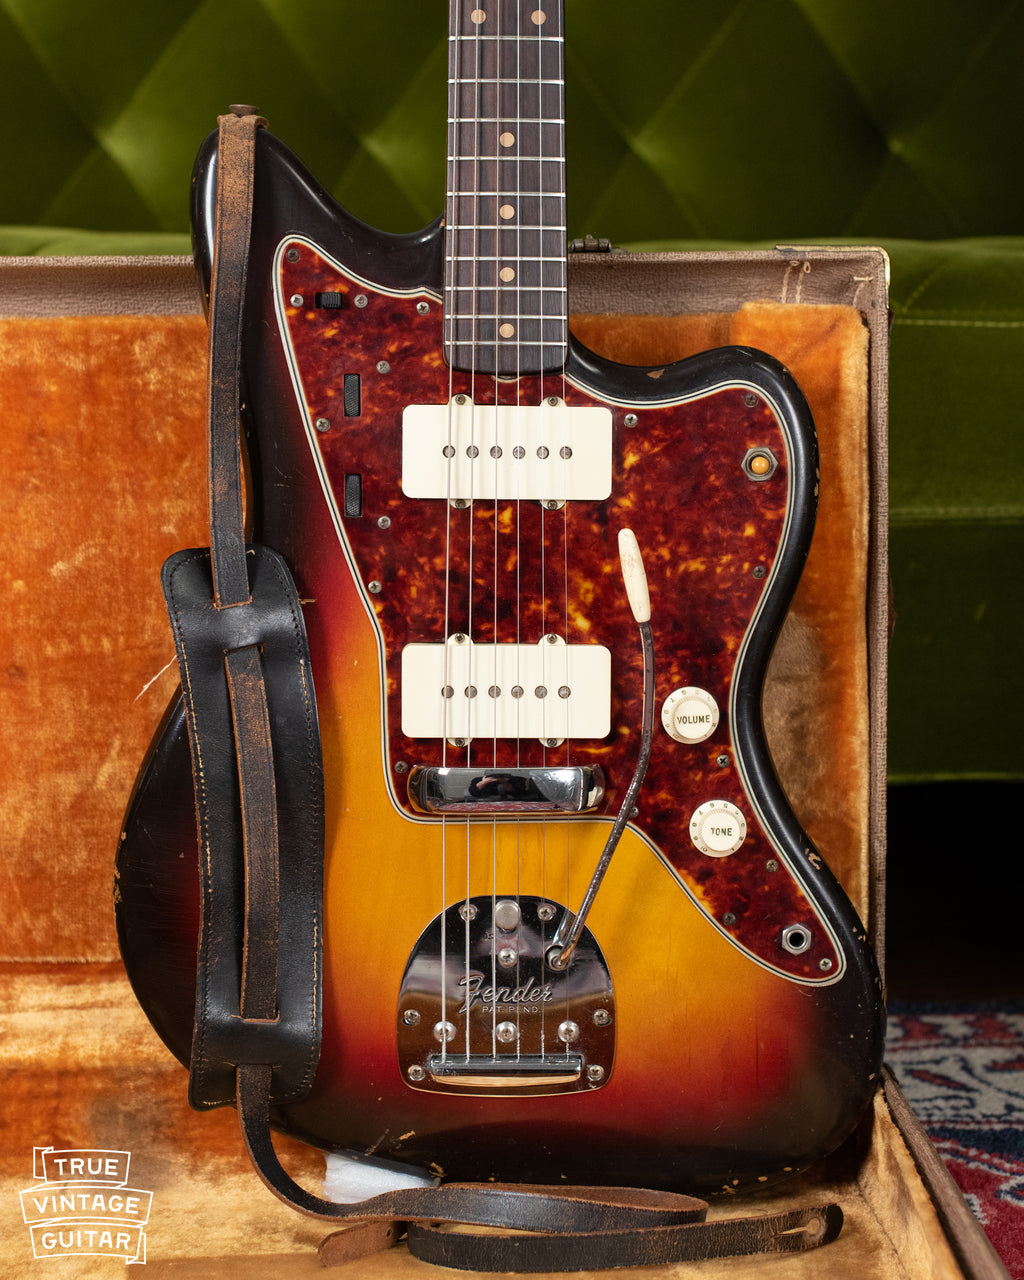 1961 Fender Jazzmaster electric guitar